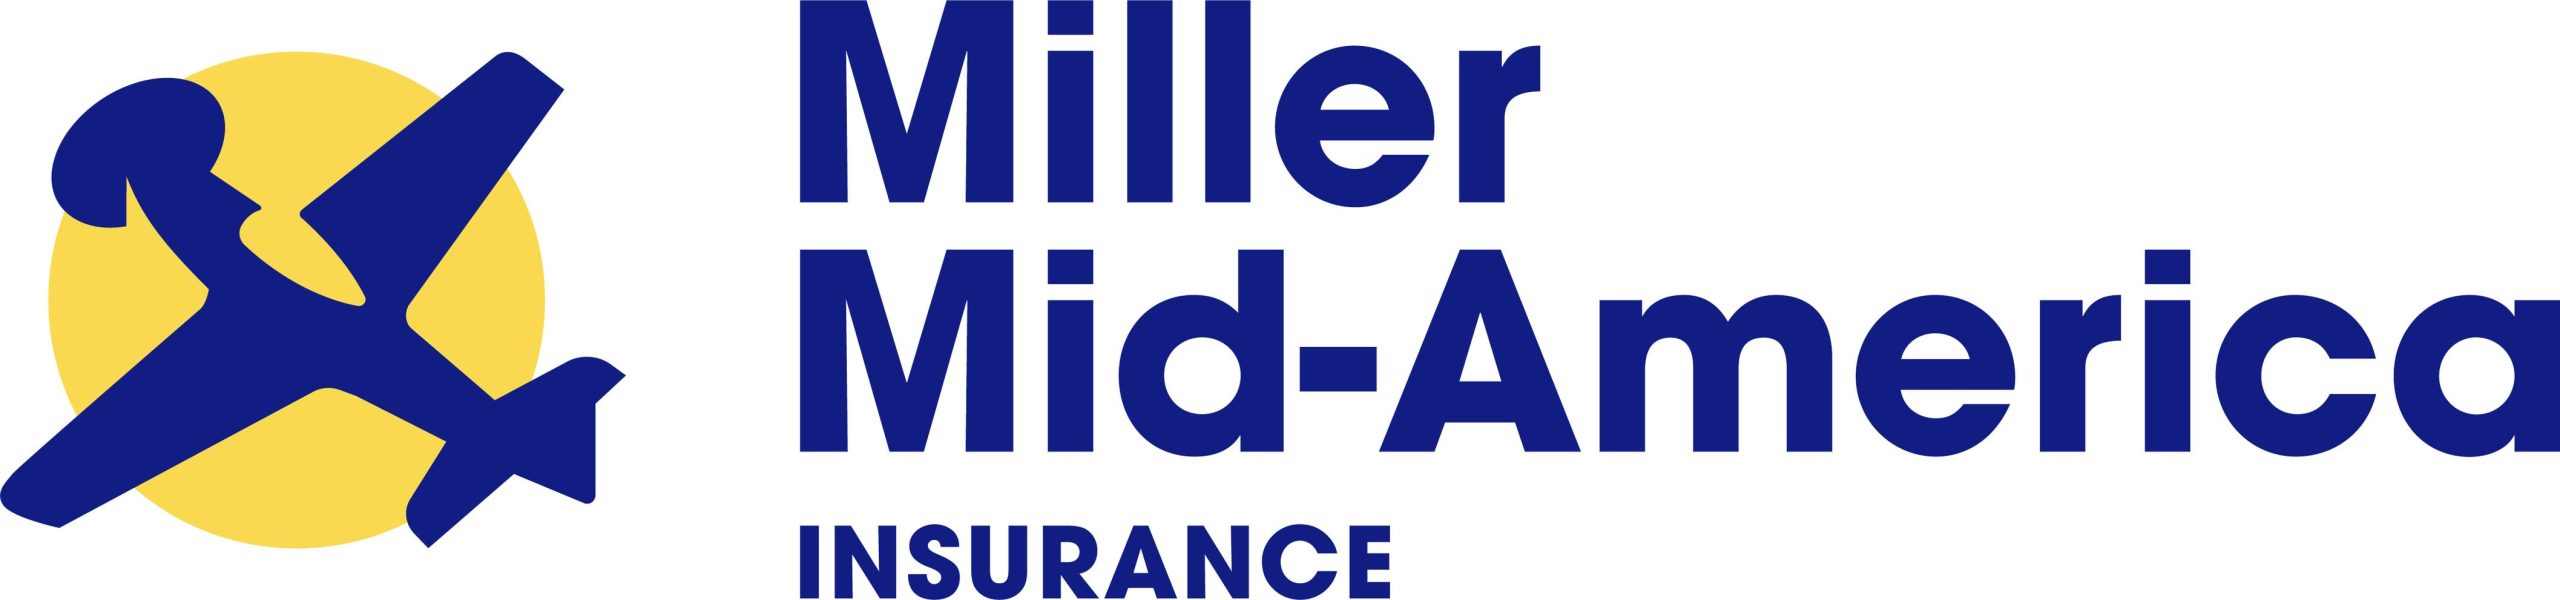 Miller Mid-America Insurance